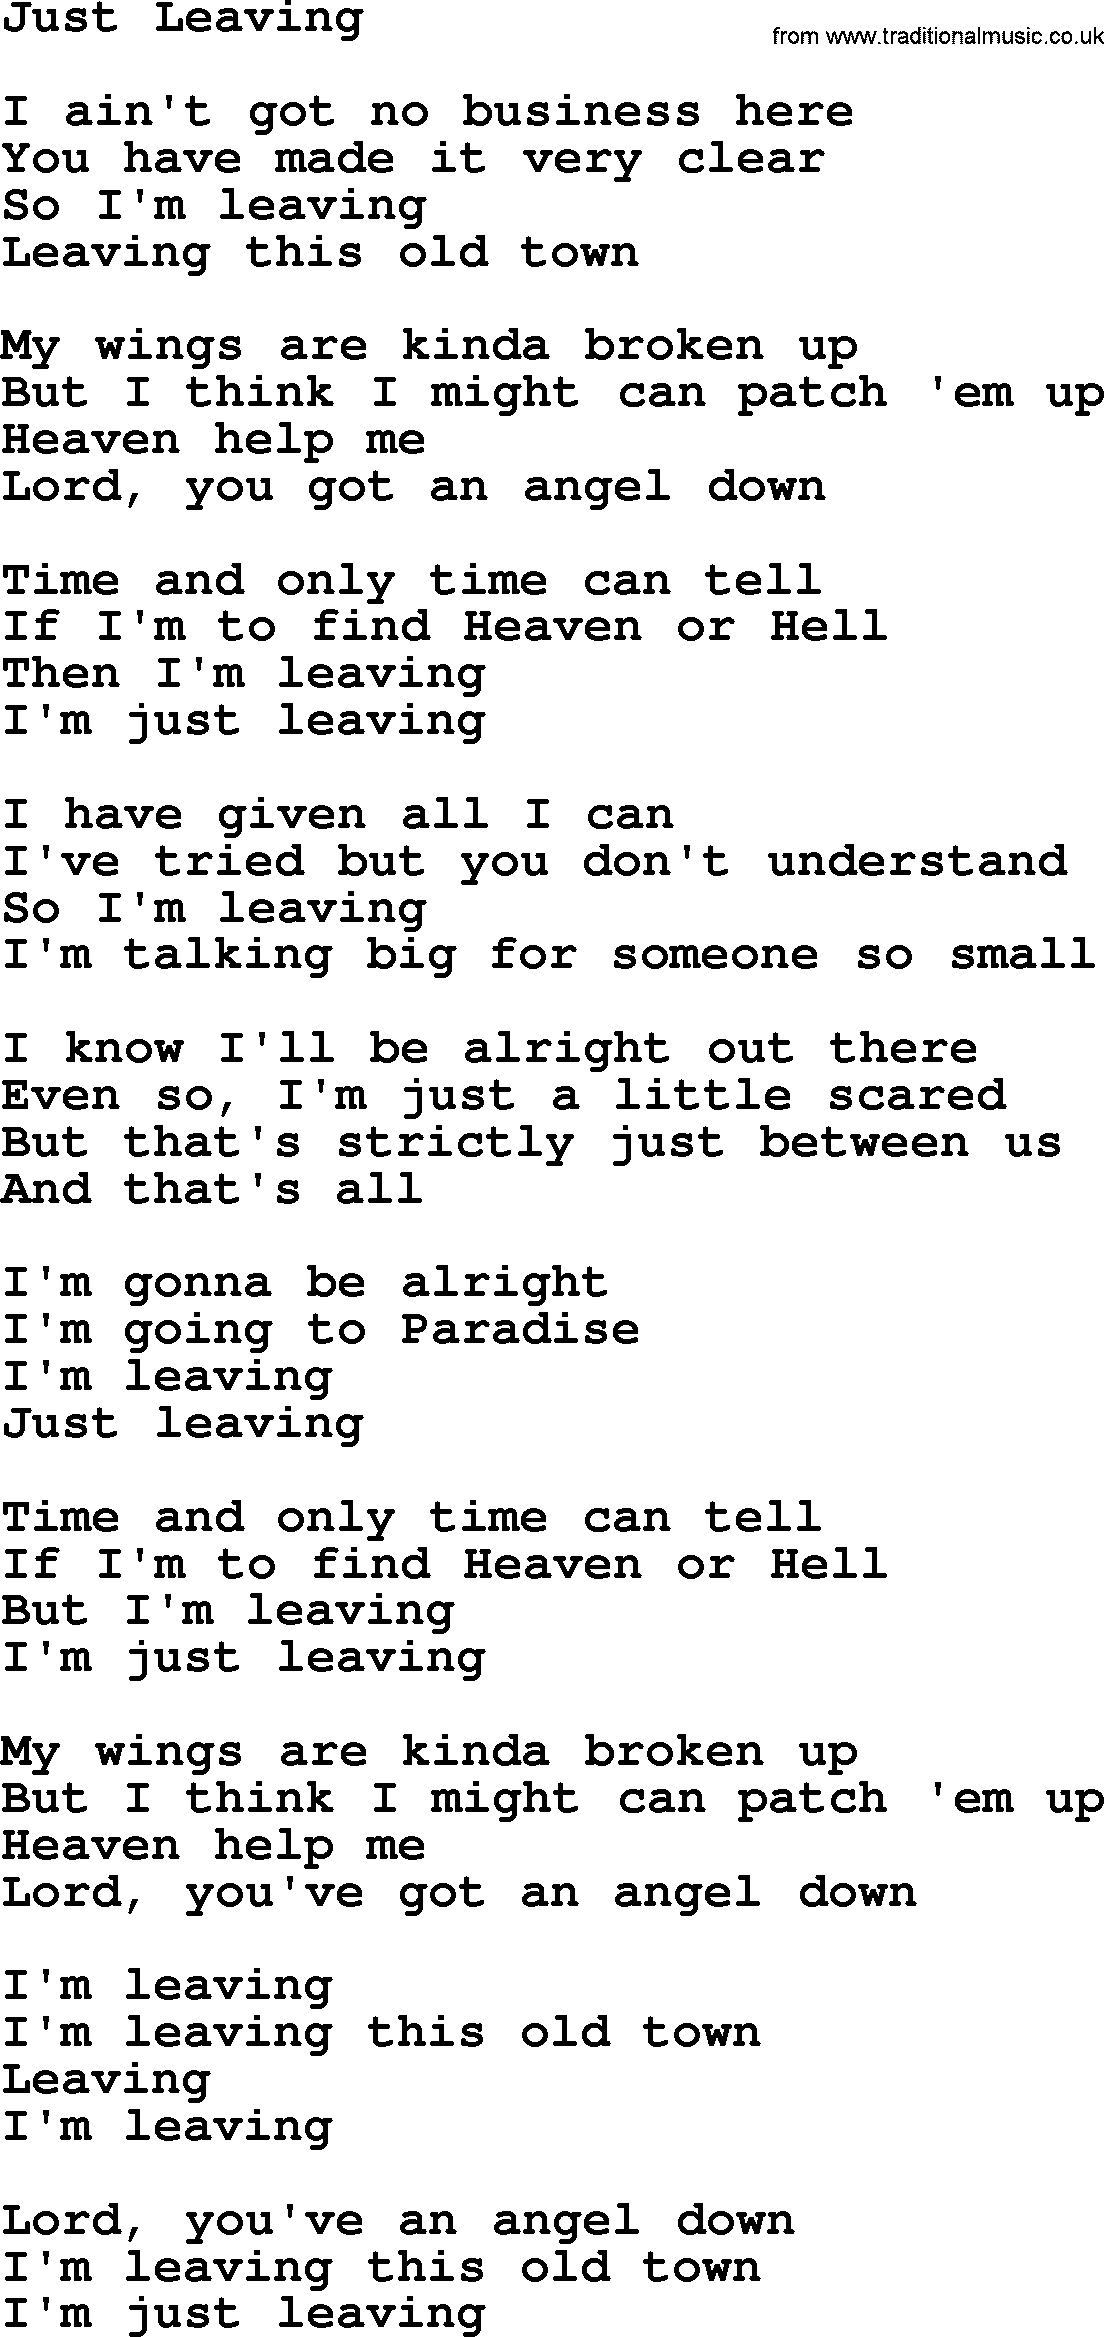 Dolly Parton song Just Leaving.txt lyrics